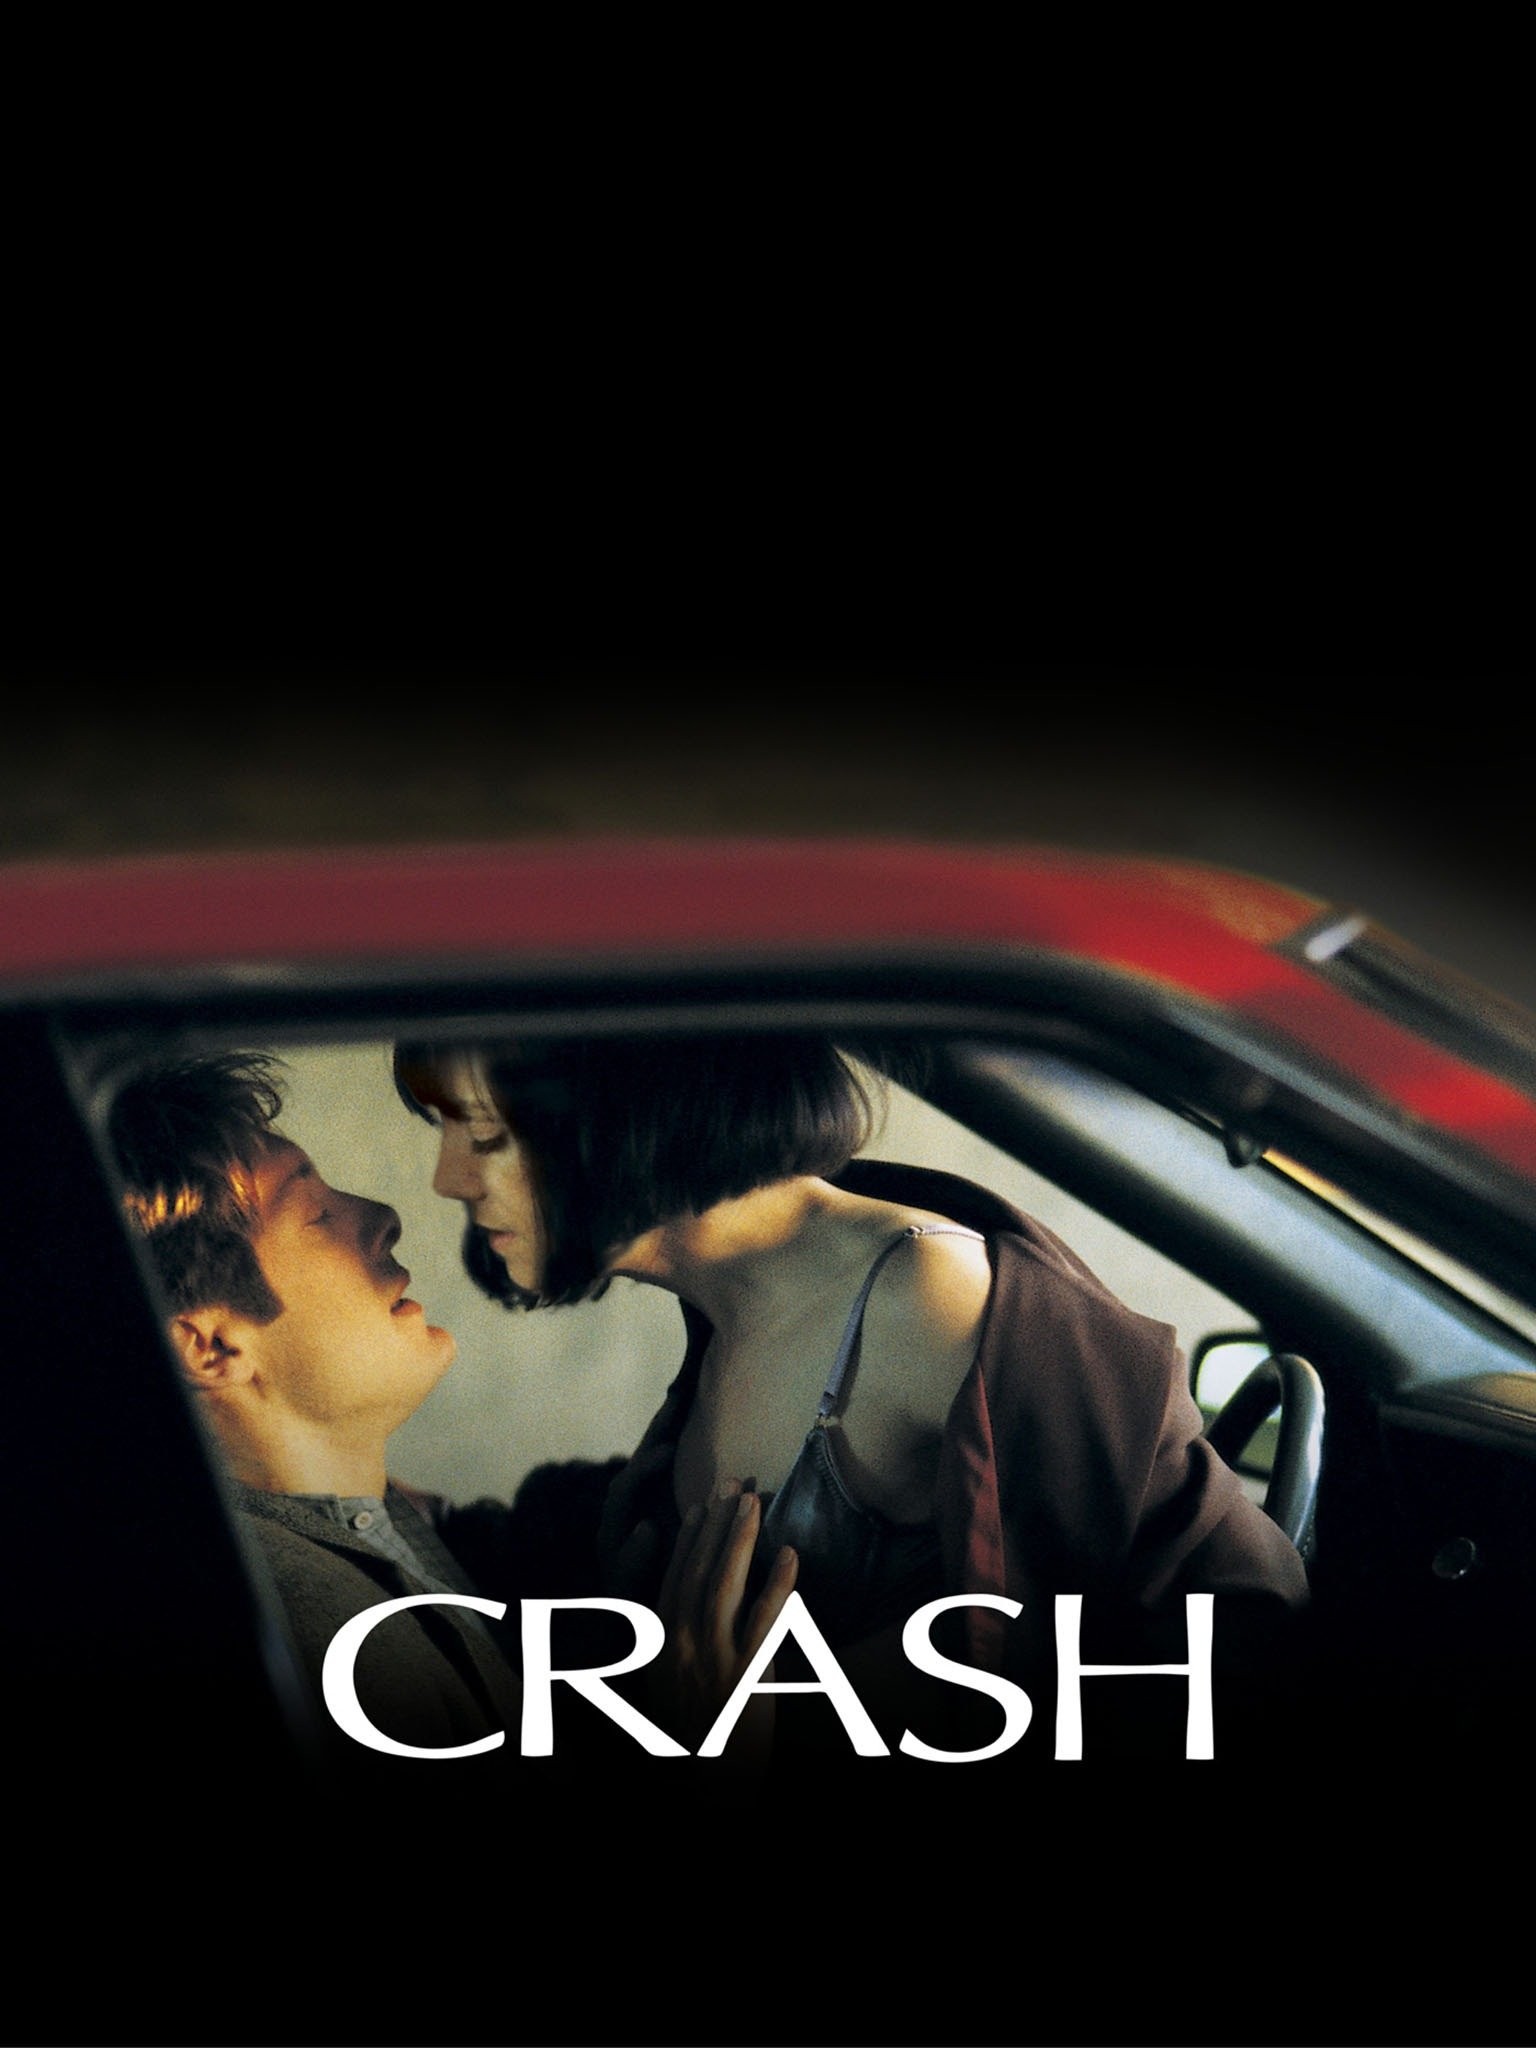 aviah balbosa recommends Crash 1996 Watch Online